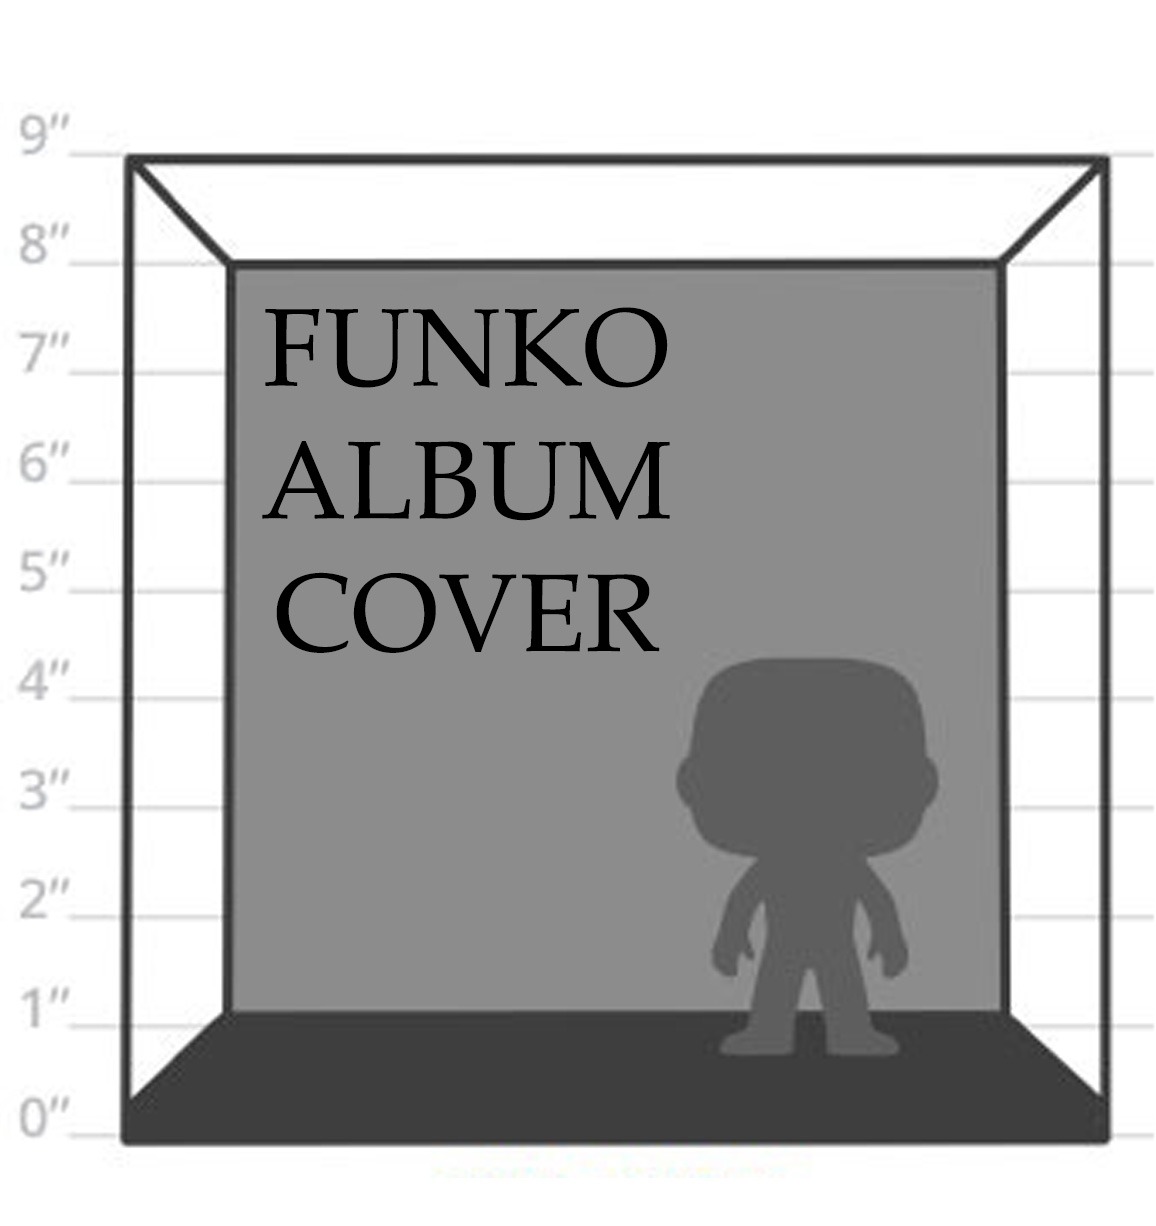 Funko Album Cover